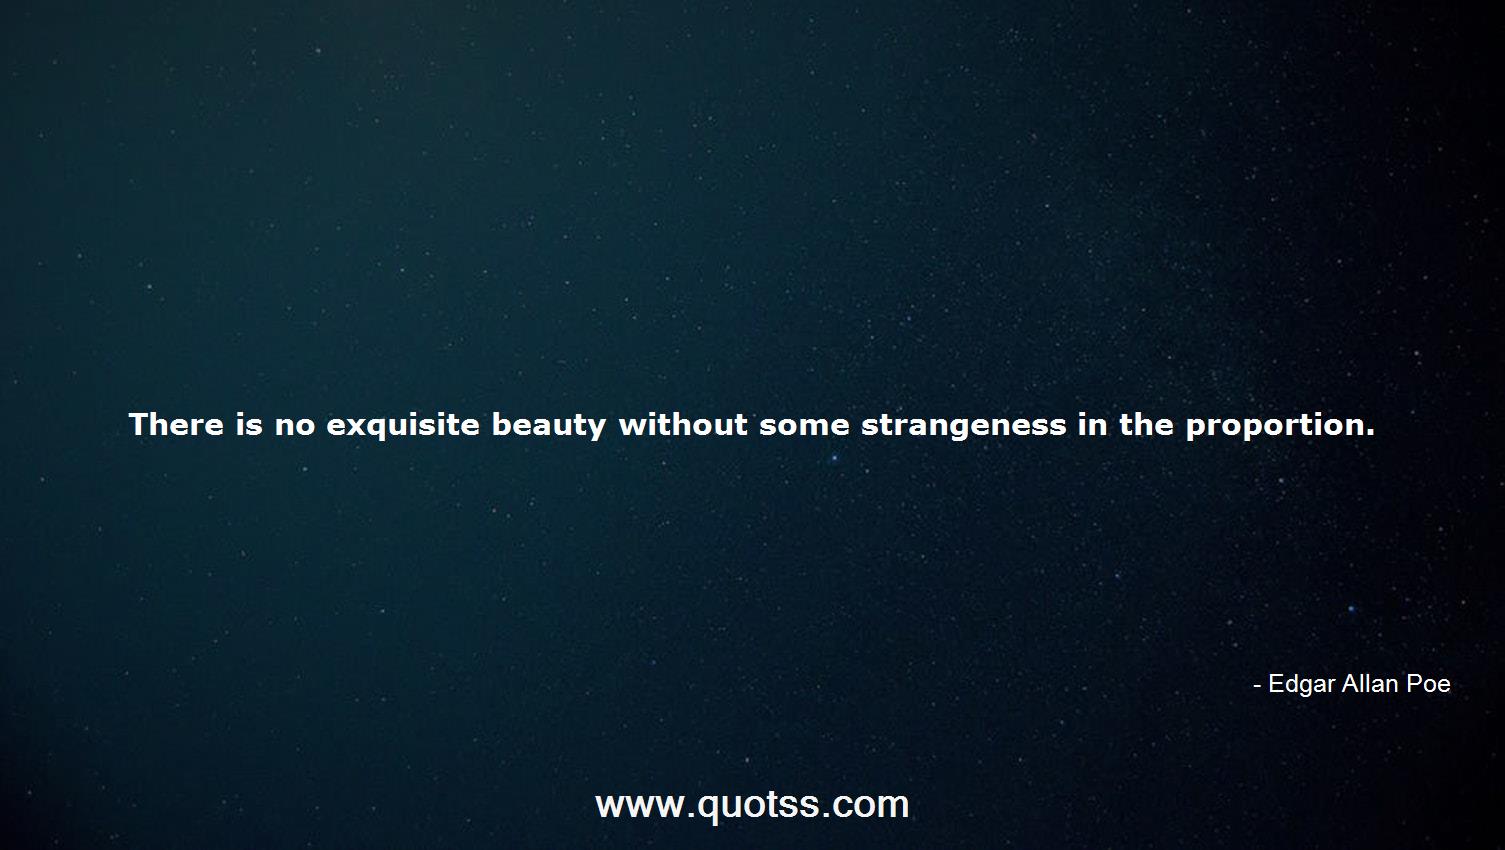 Edgar Allan Poe Quote on Quotss